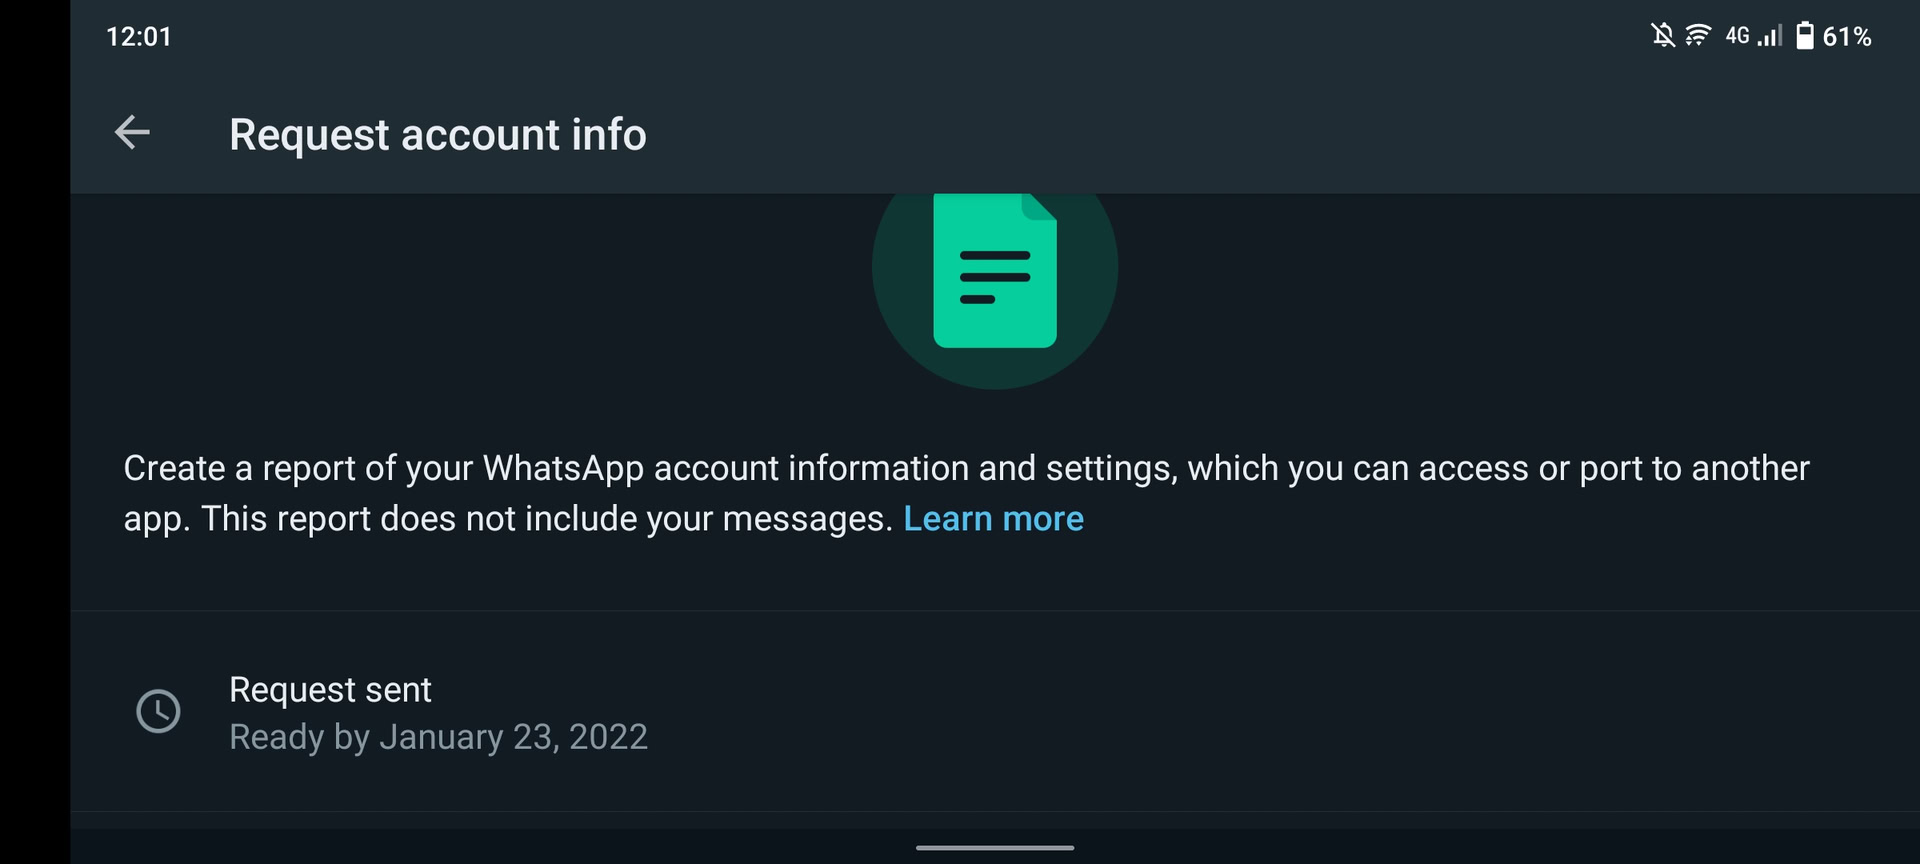 WhatsApp request account info